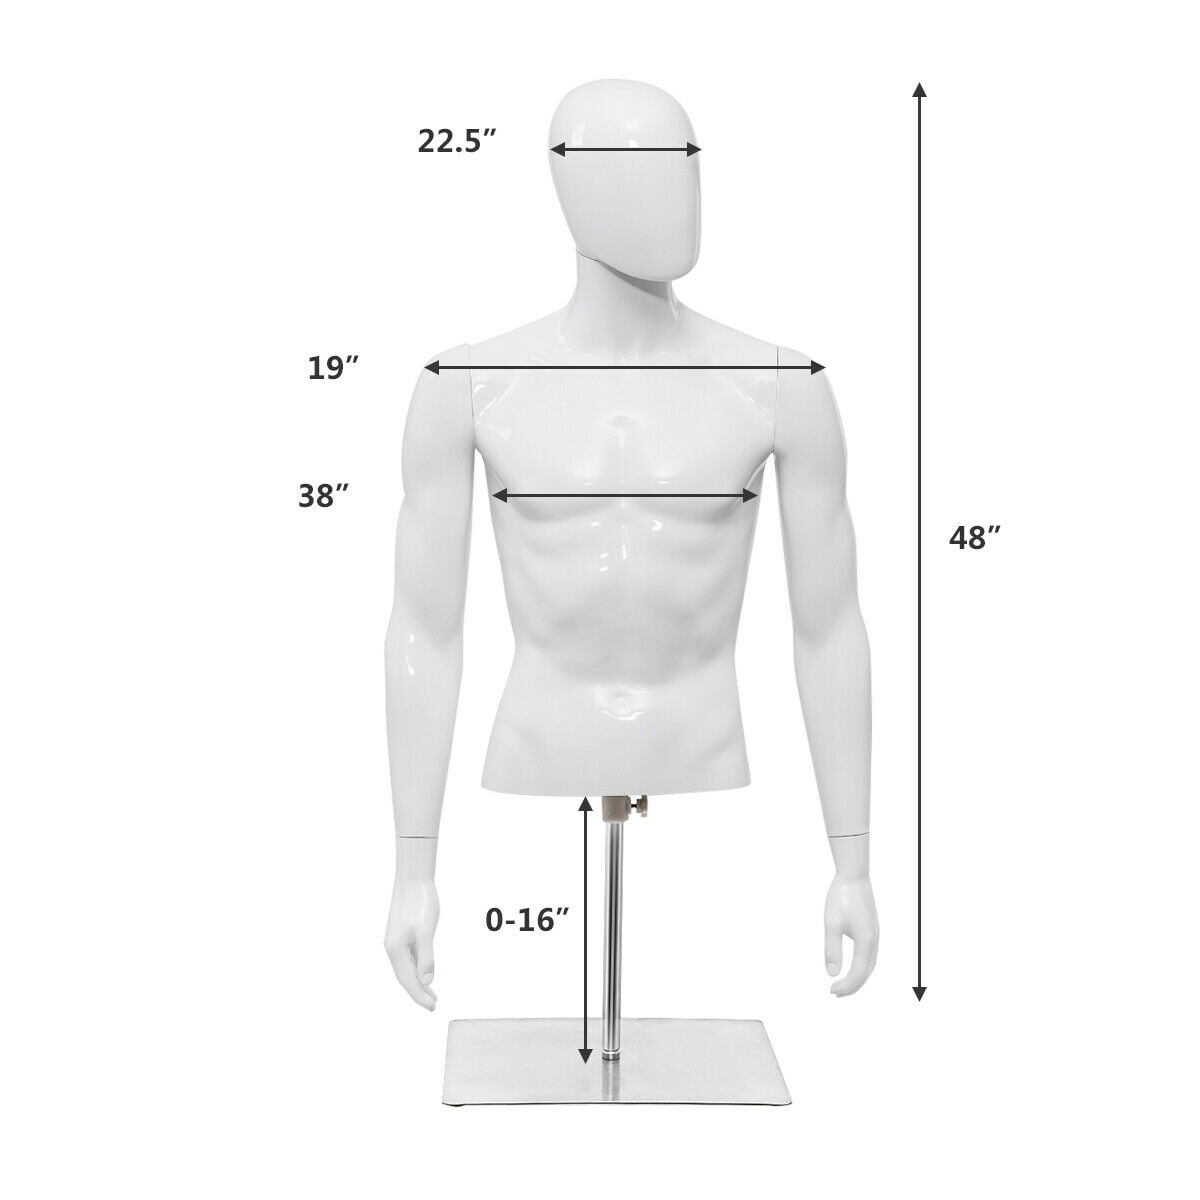 Chest 36", Waist 30" Male Plastic Half Body Mannequin Torso 